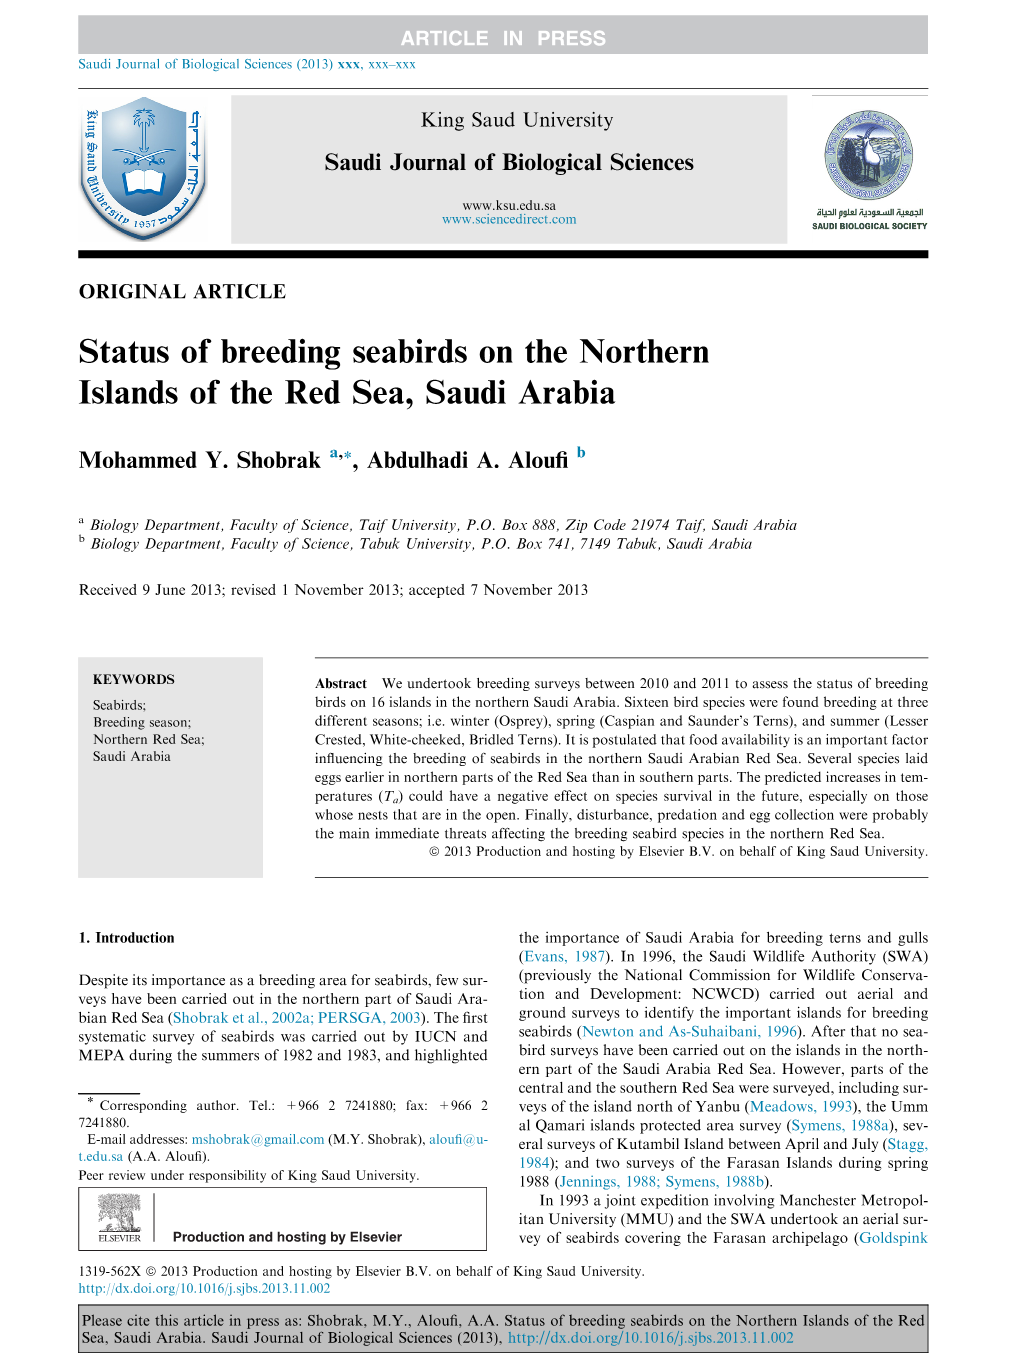 Status of Breeding Seabirds on the Northern Islands of the Red Sea, Saudi Arabia